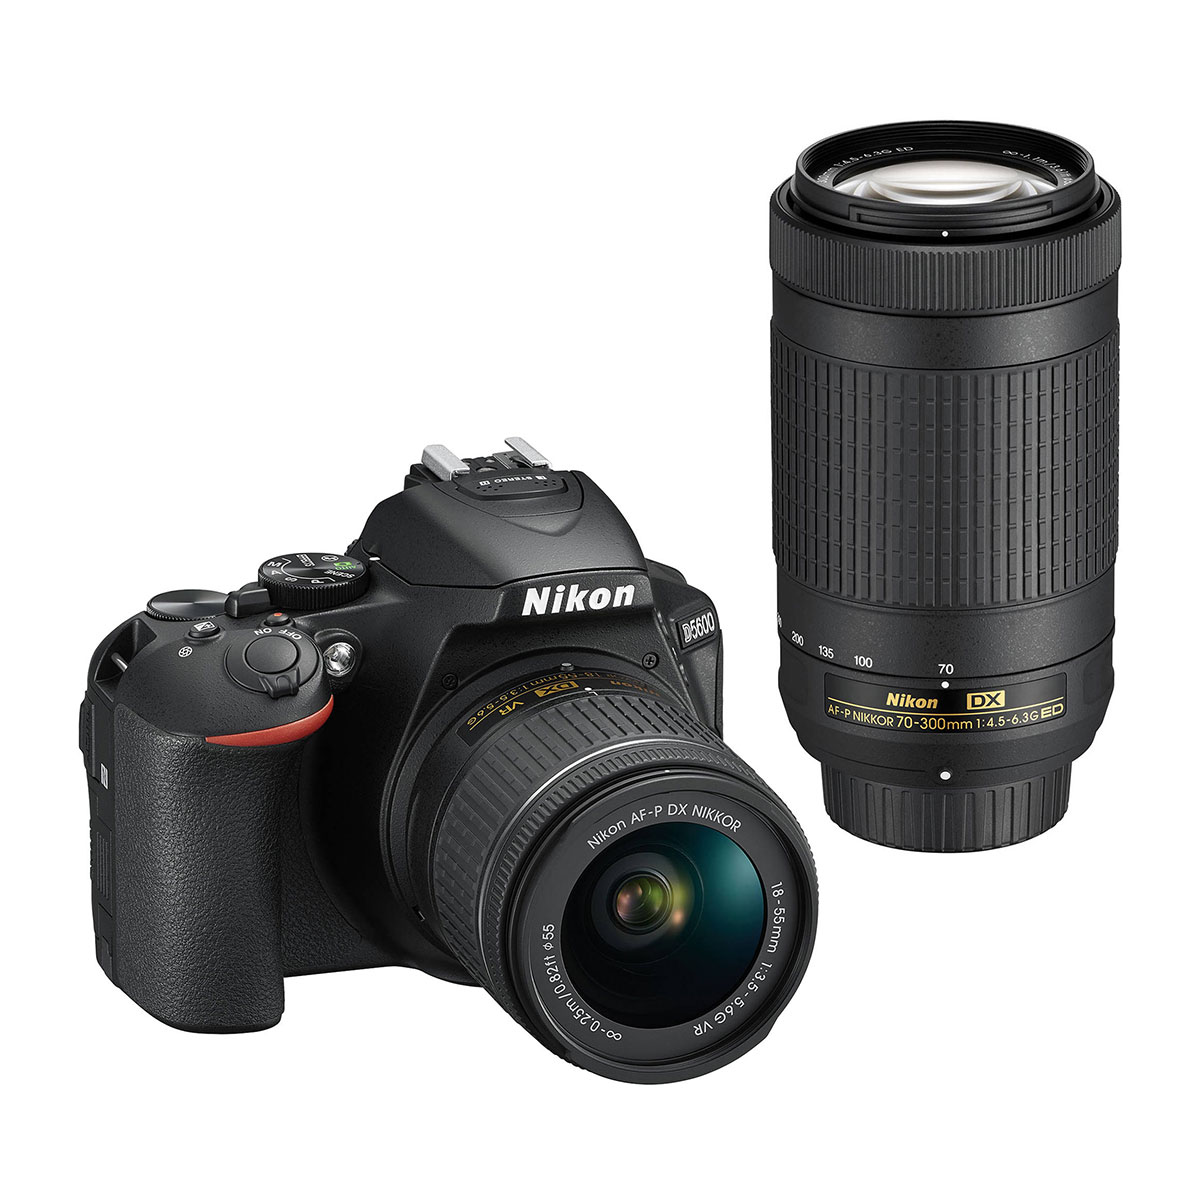 картинка Nikon D5600 kit with AF-P DX NIKKOR 18-55MM F/3.5-5.6G VR AF-P DX NIKKOR 70-300mm f/4.5-6.3G ED от магазина Chako.ua